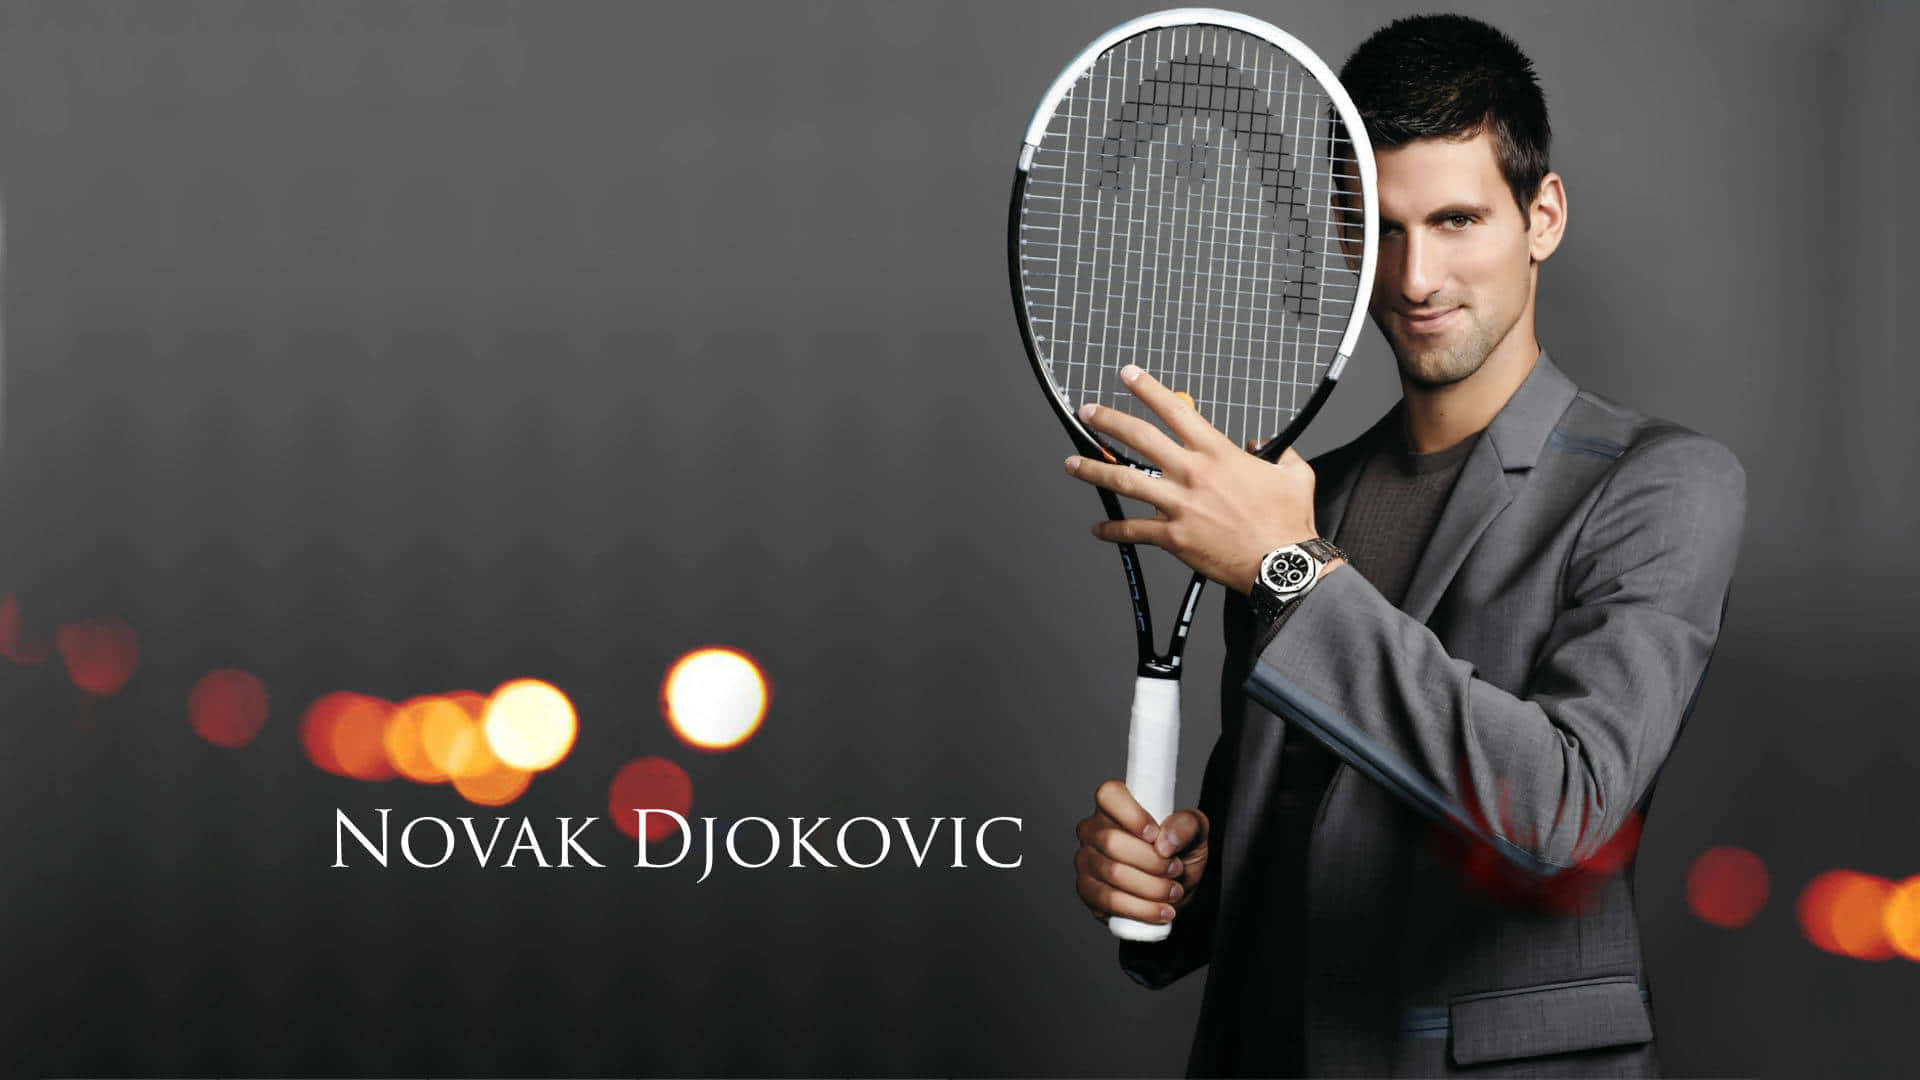 HD Serbian Tennis Player Novak Djokovic Poster Background